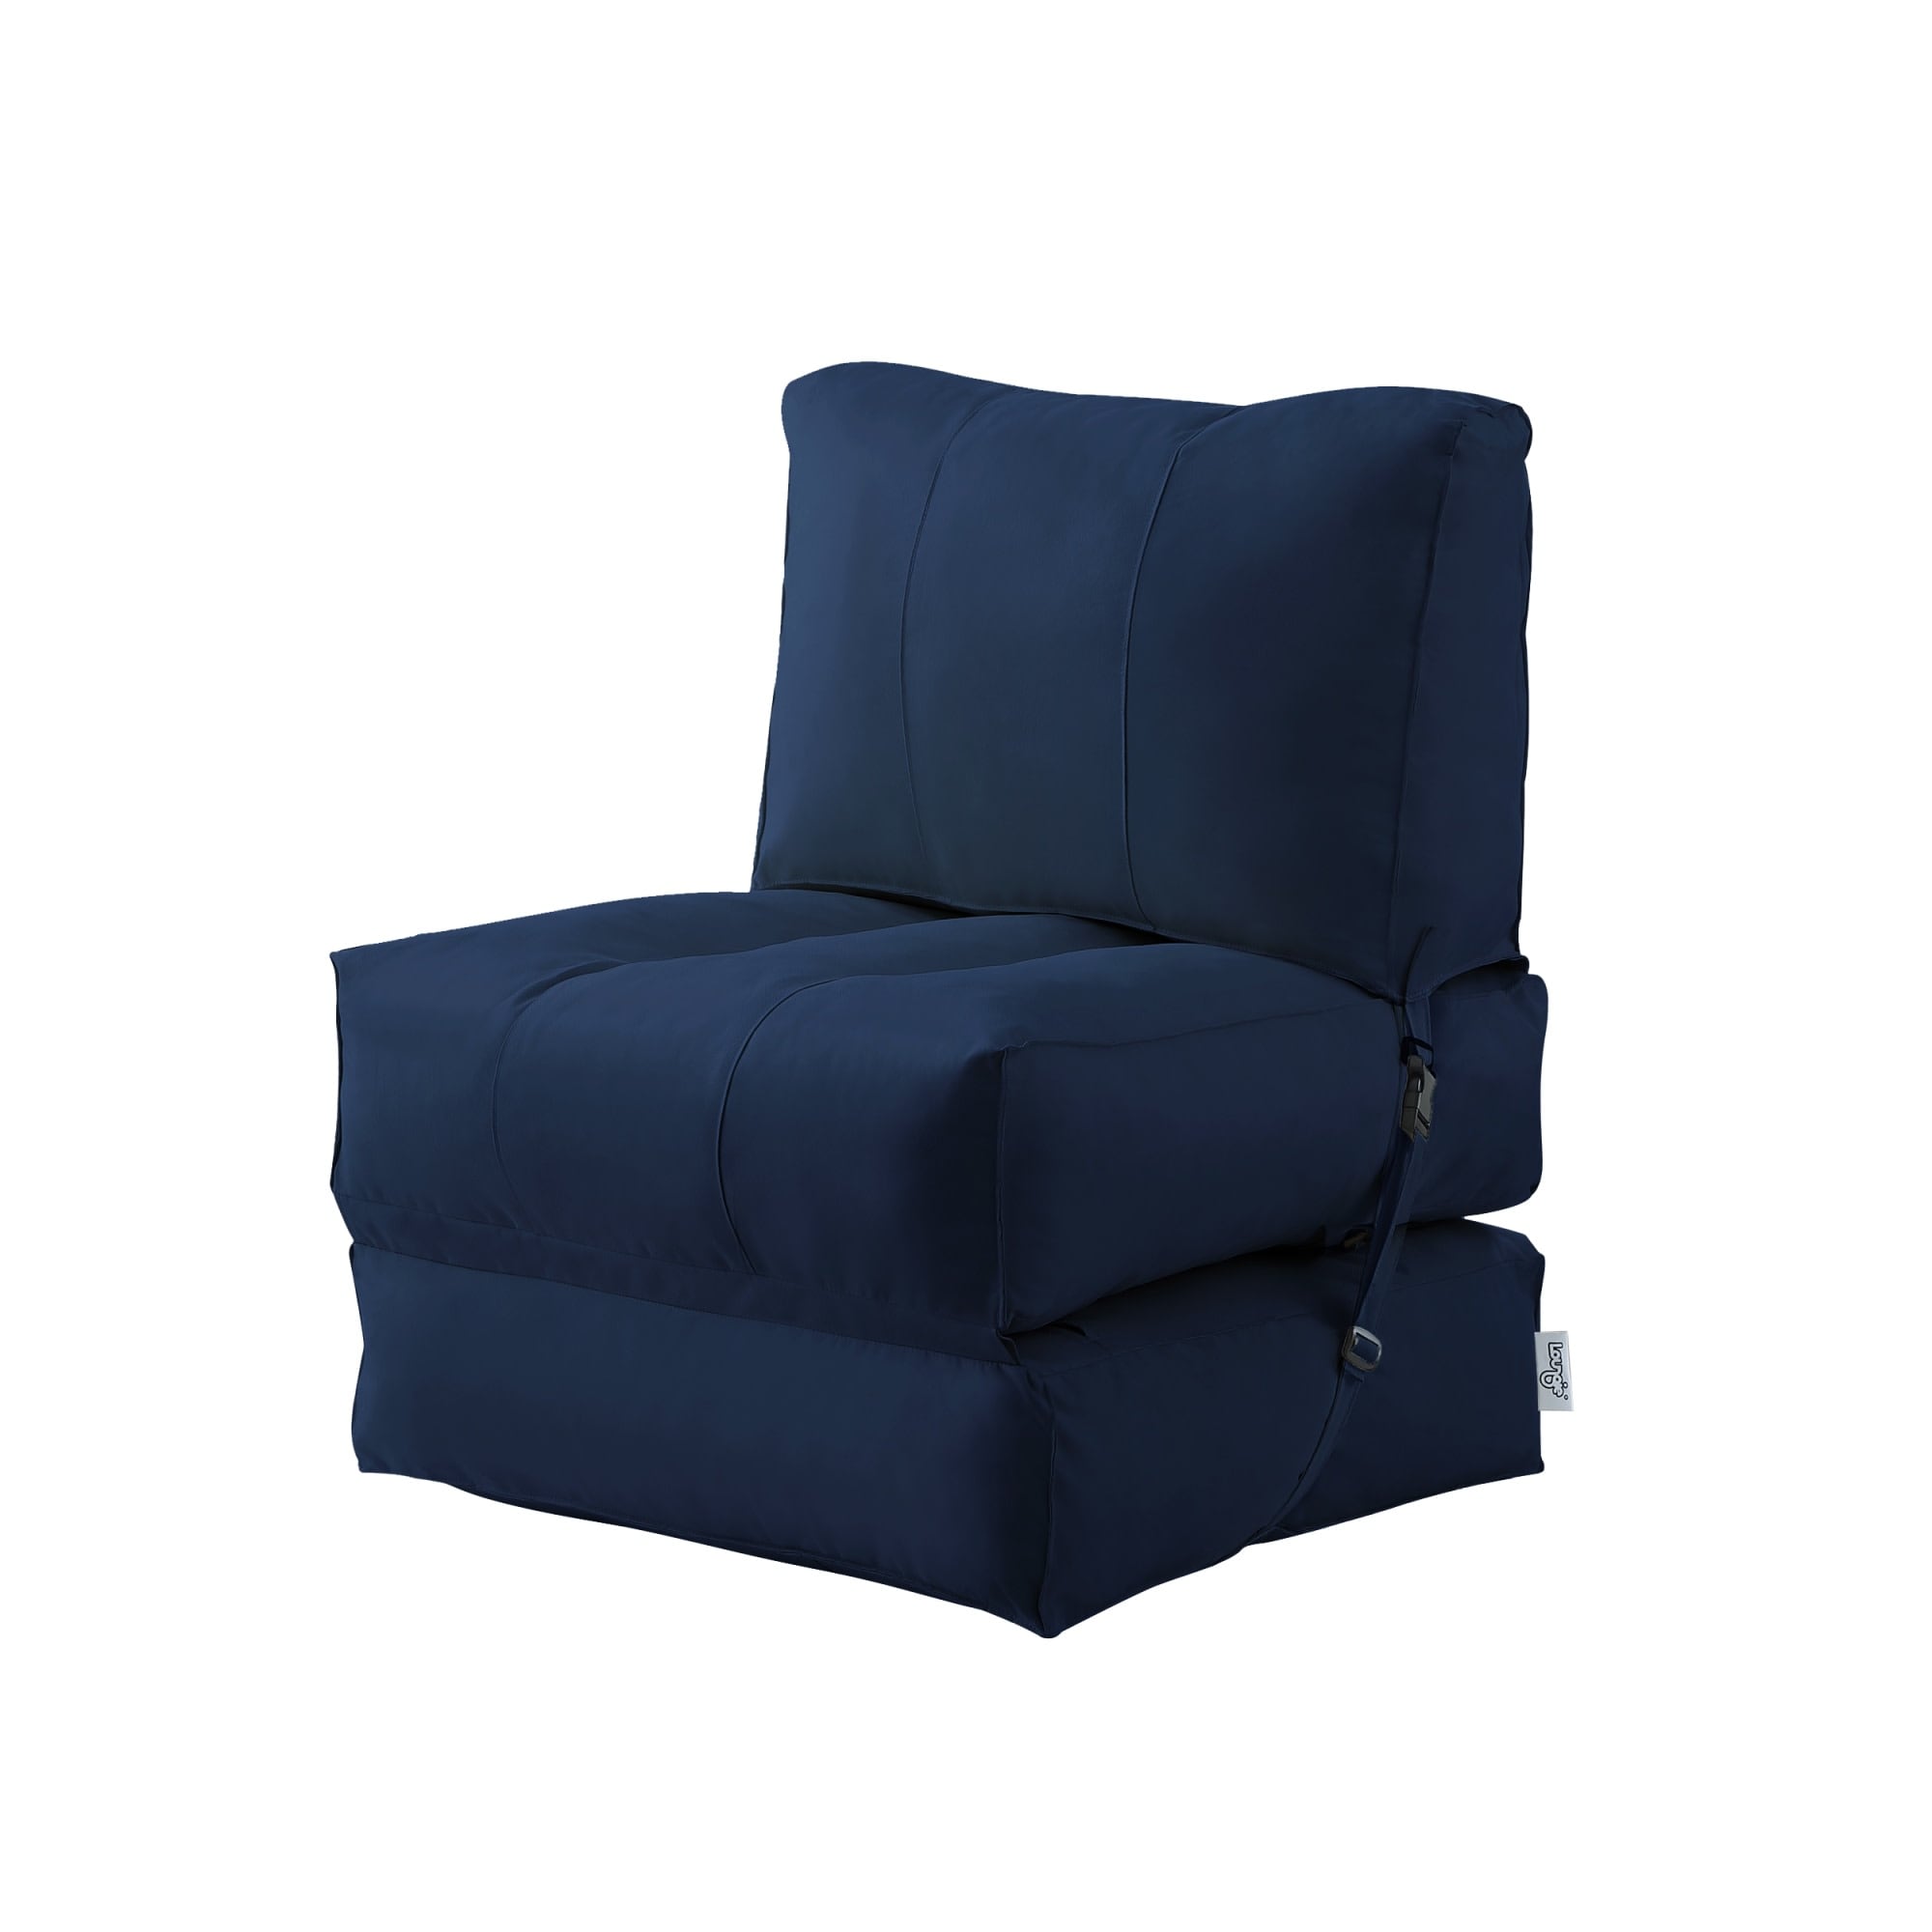 Loungie Comfy Memory Foam Chair Lounger Bean Bag Indoor&Outdoor in Light Grey